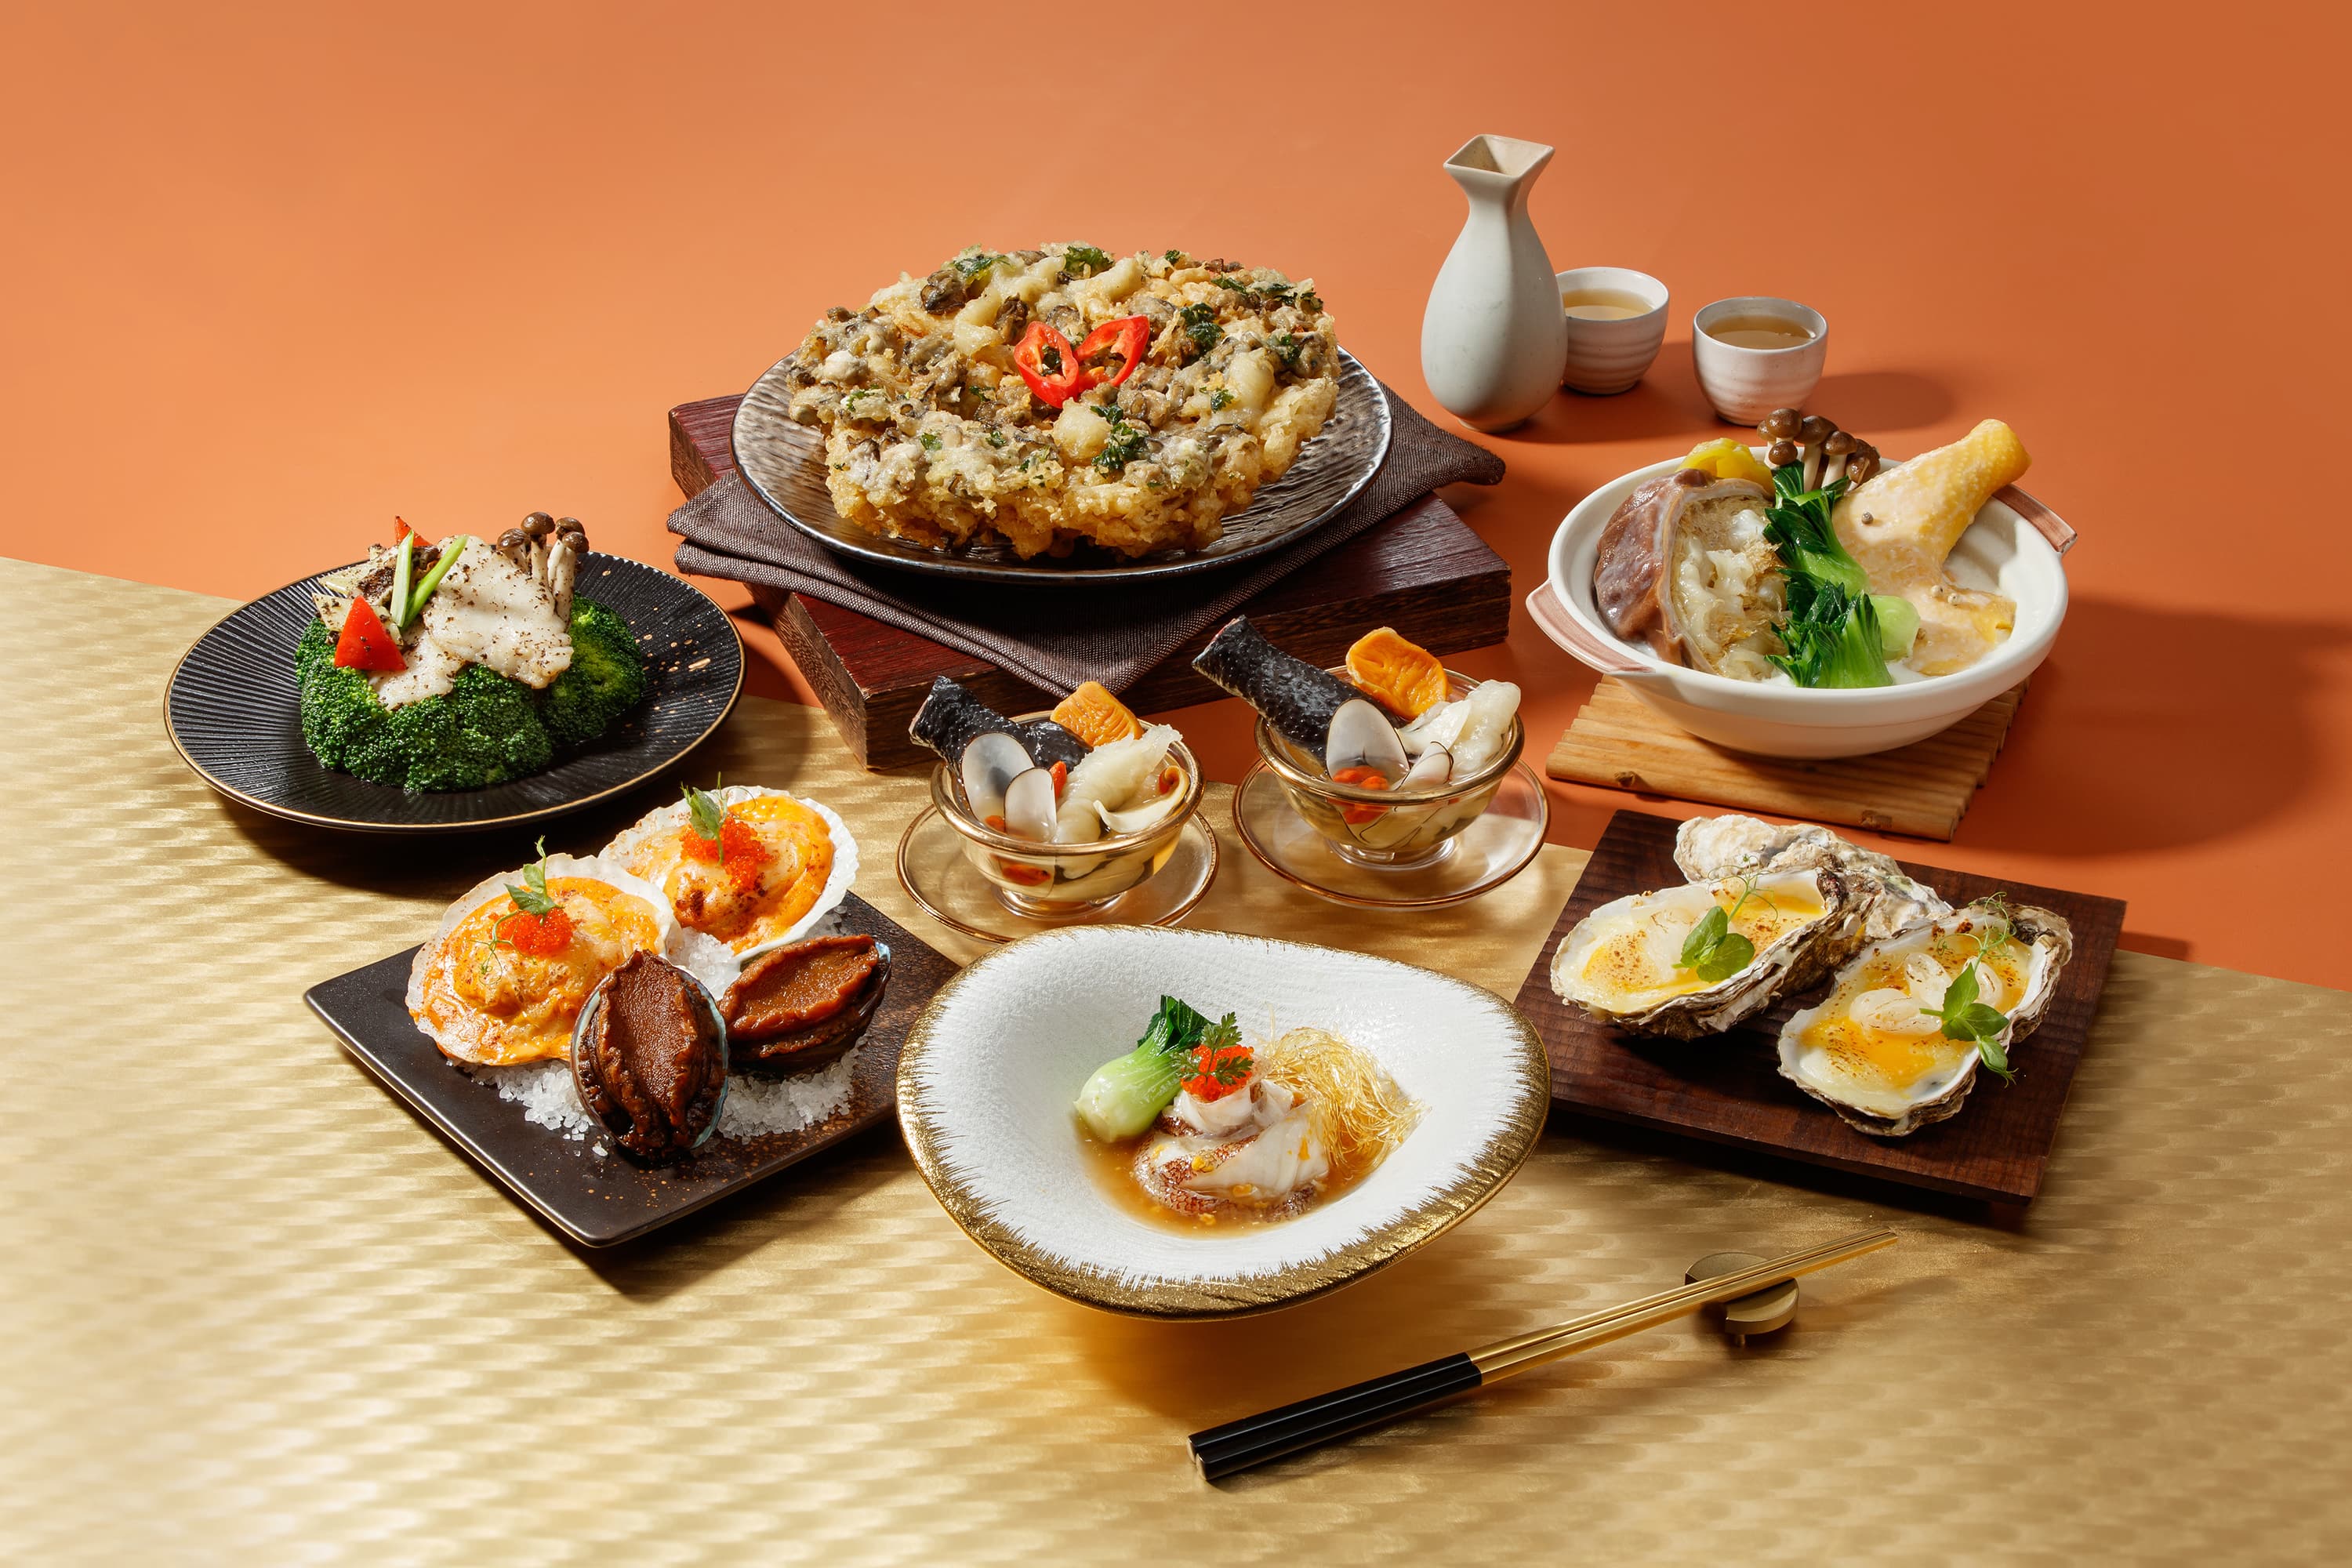 Enrapturing by Fish Maw Seafood Dinner Buffet at Park Hotel Hong Kong